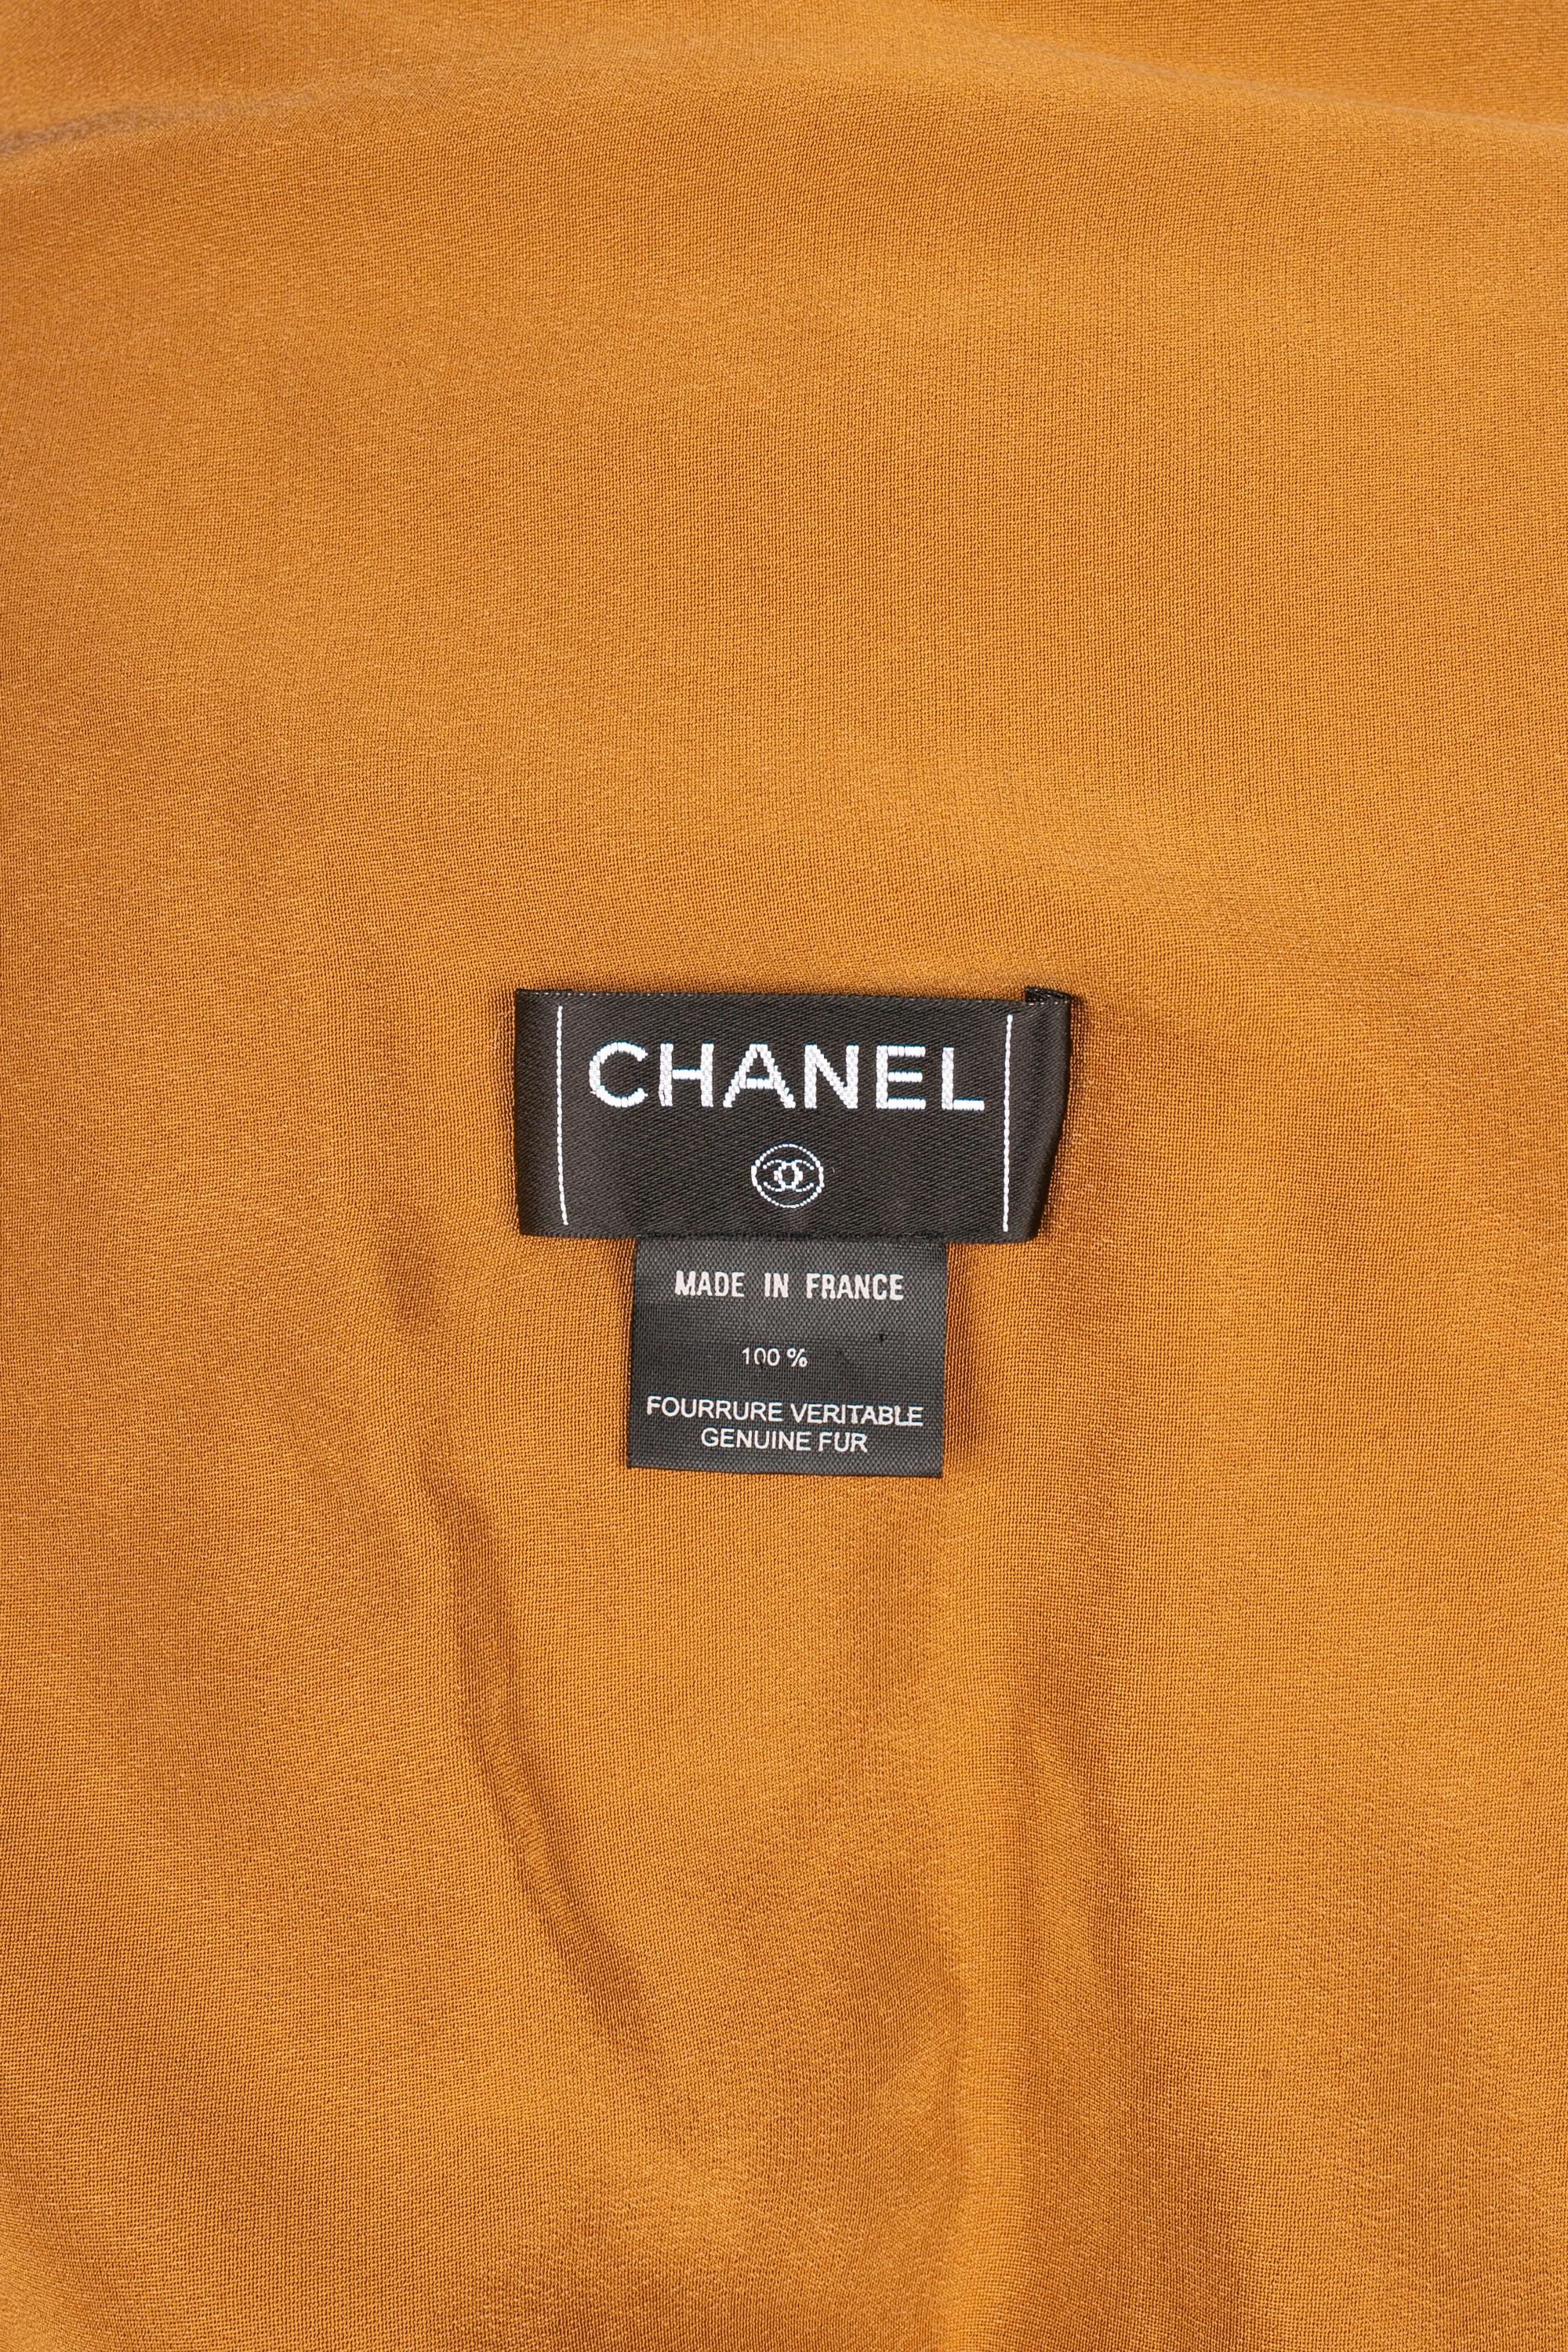 Chanel fur big stole For Sale 1